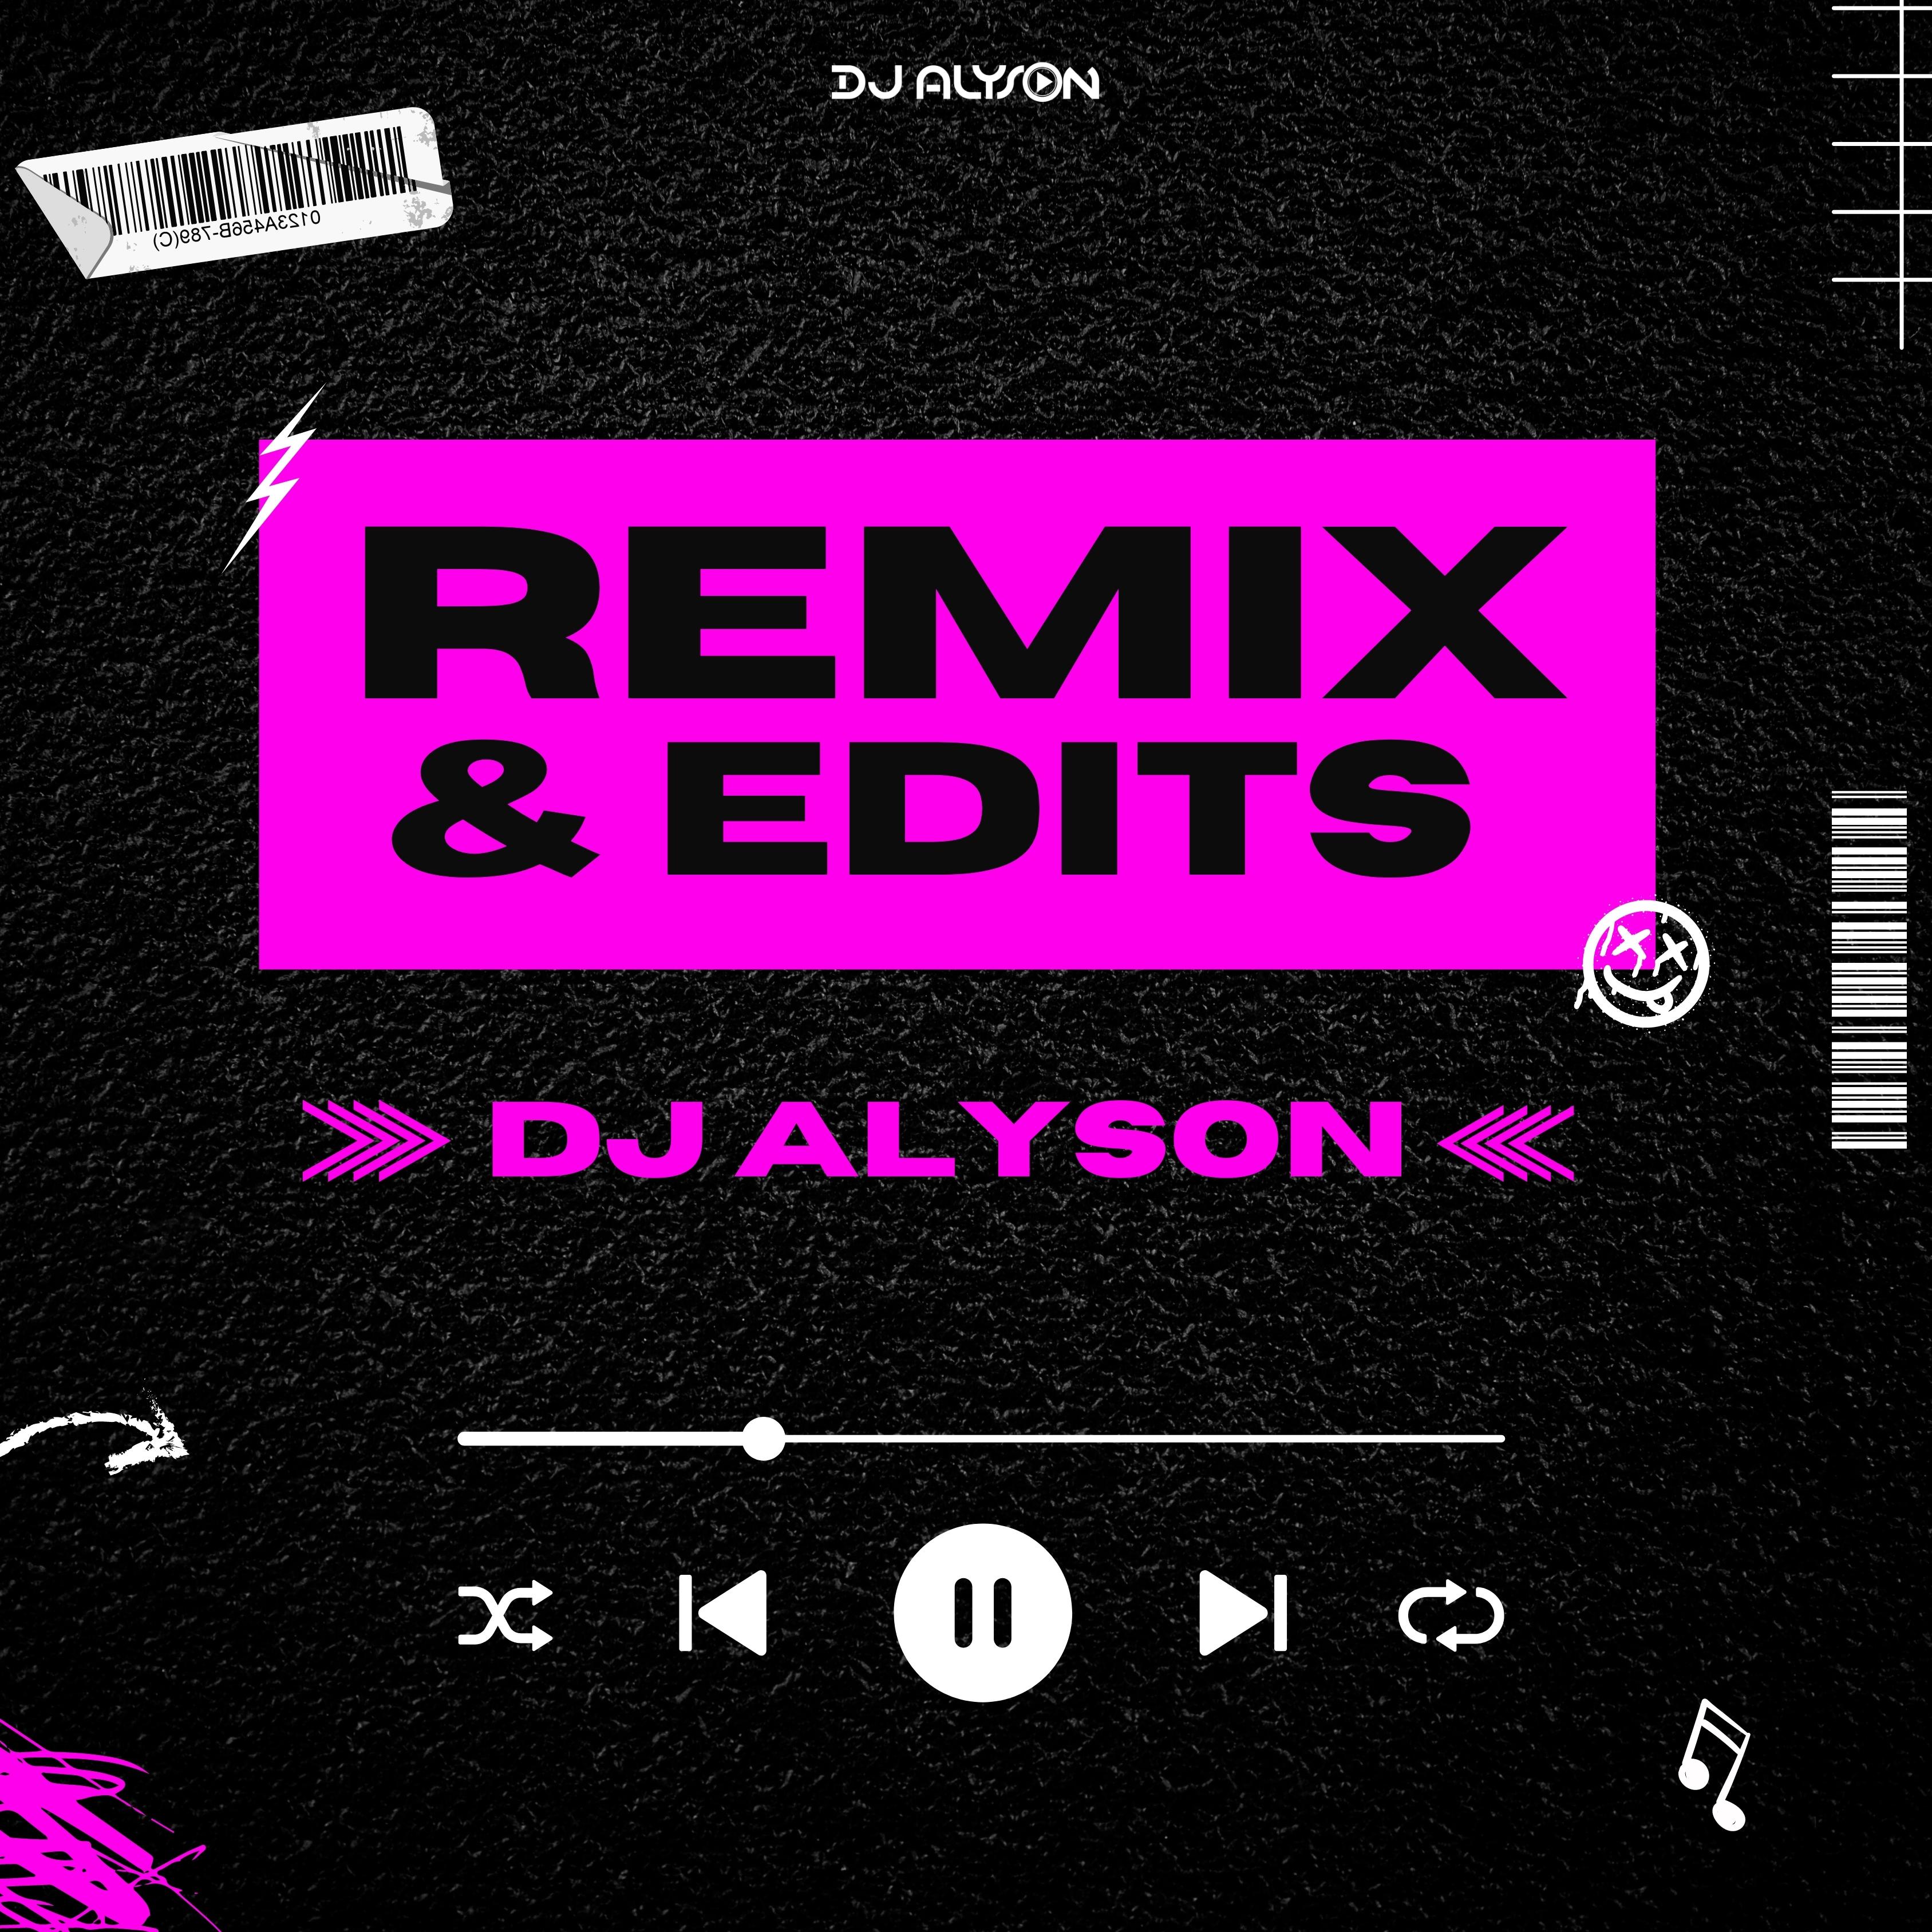 DJ Alyson - Treme Bunda (Remix)